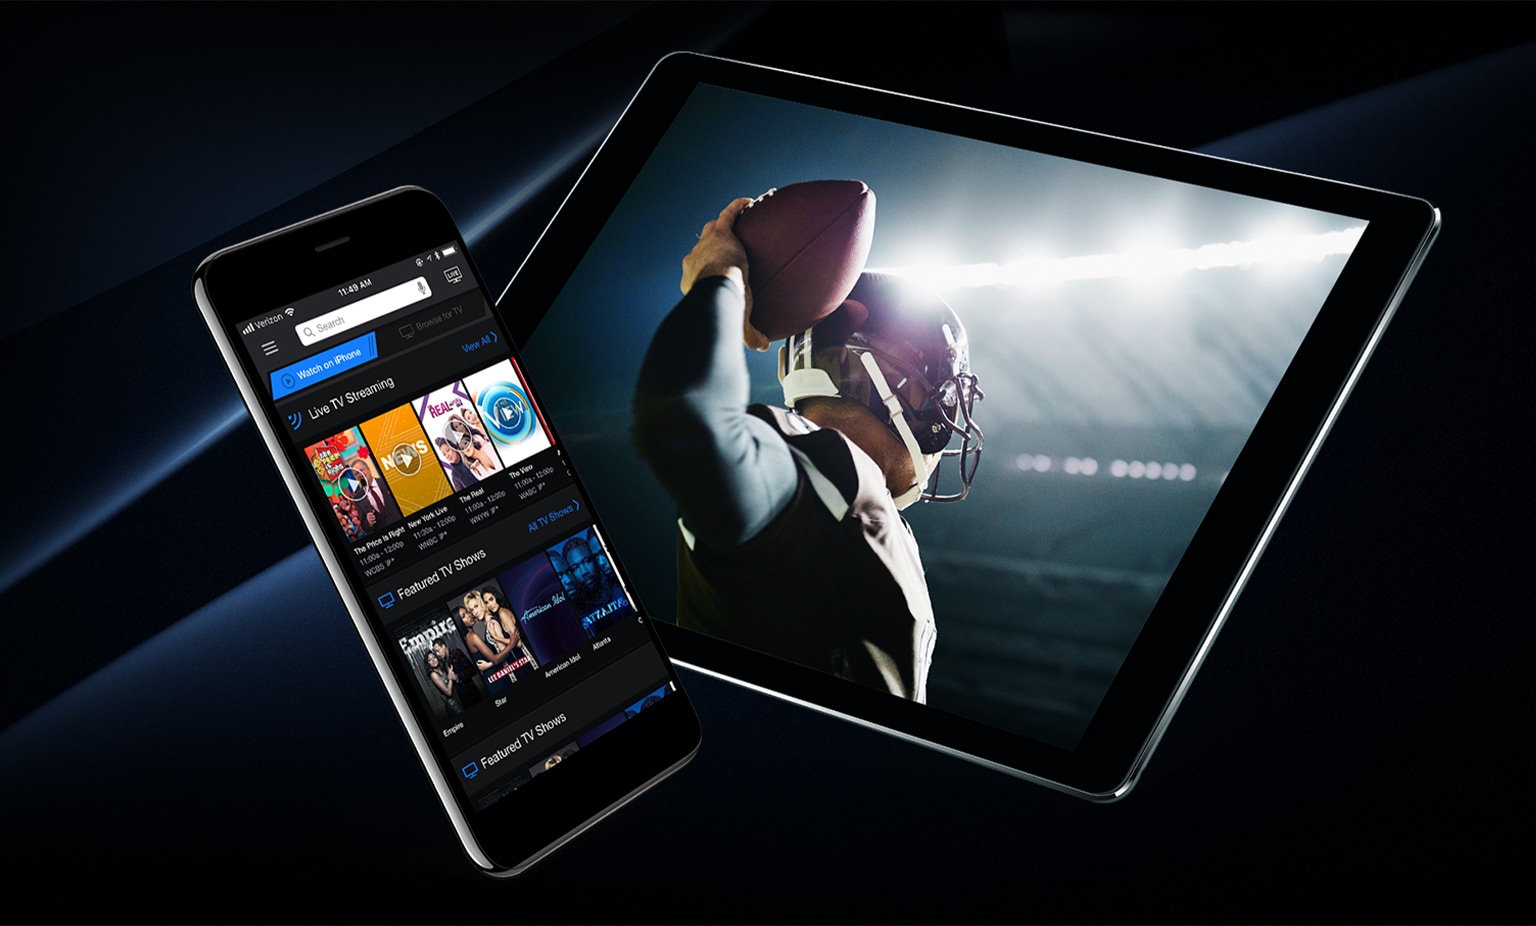 direct tv app for mac in app store